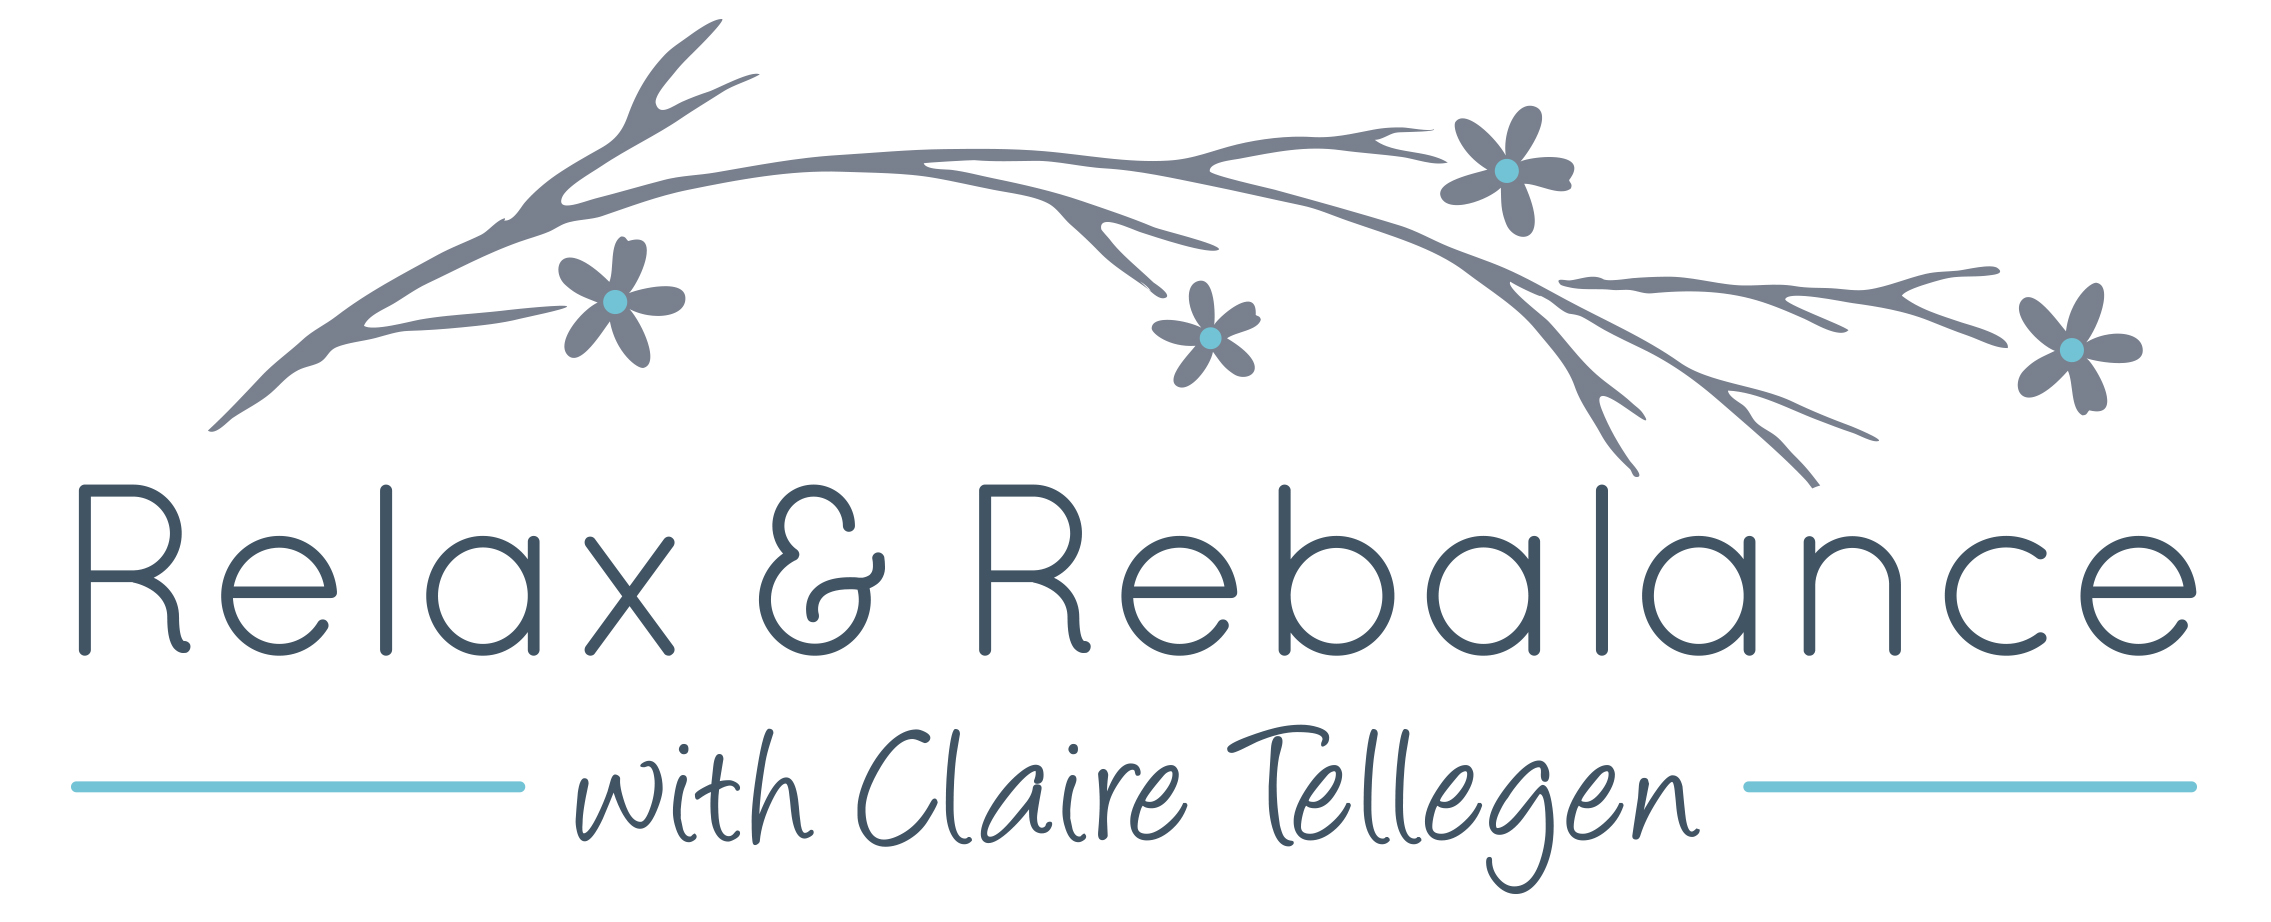 Relax and Rebalance Reflexology & Wellbeing